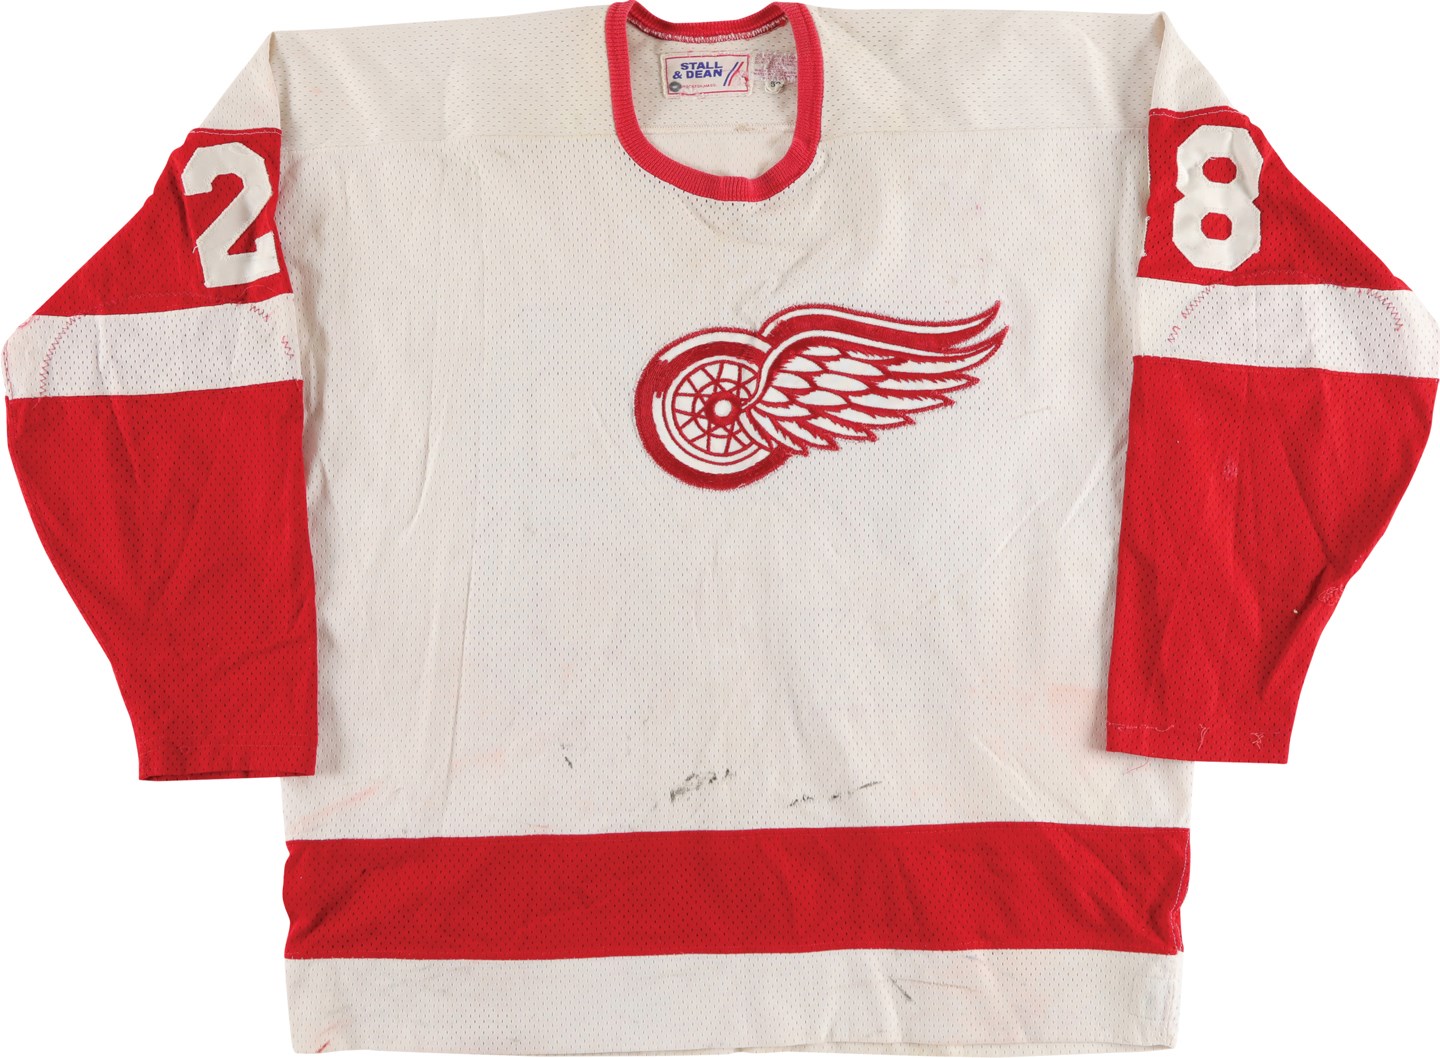 - 1979-80 Reed Larson Detroit Red Wings Game Worn Jersey